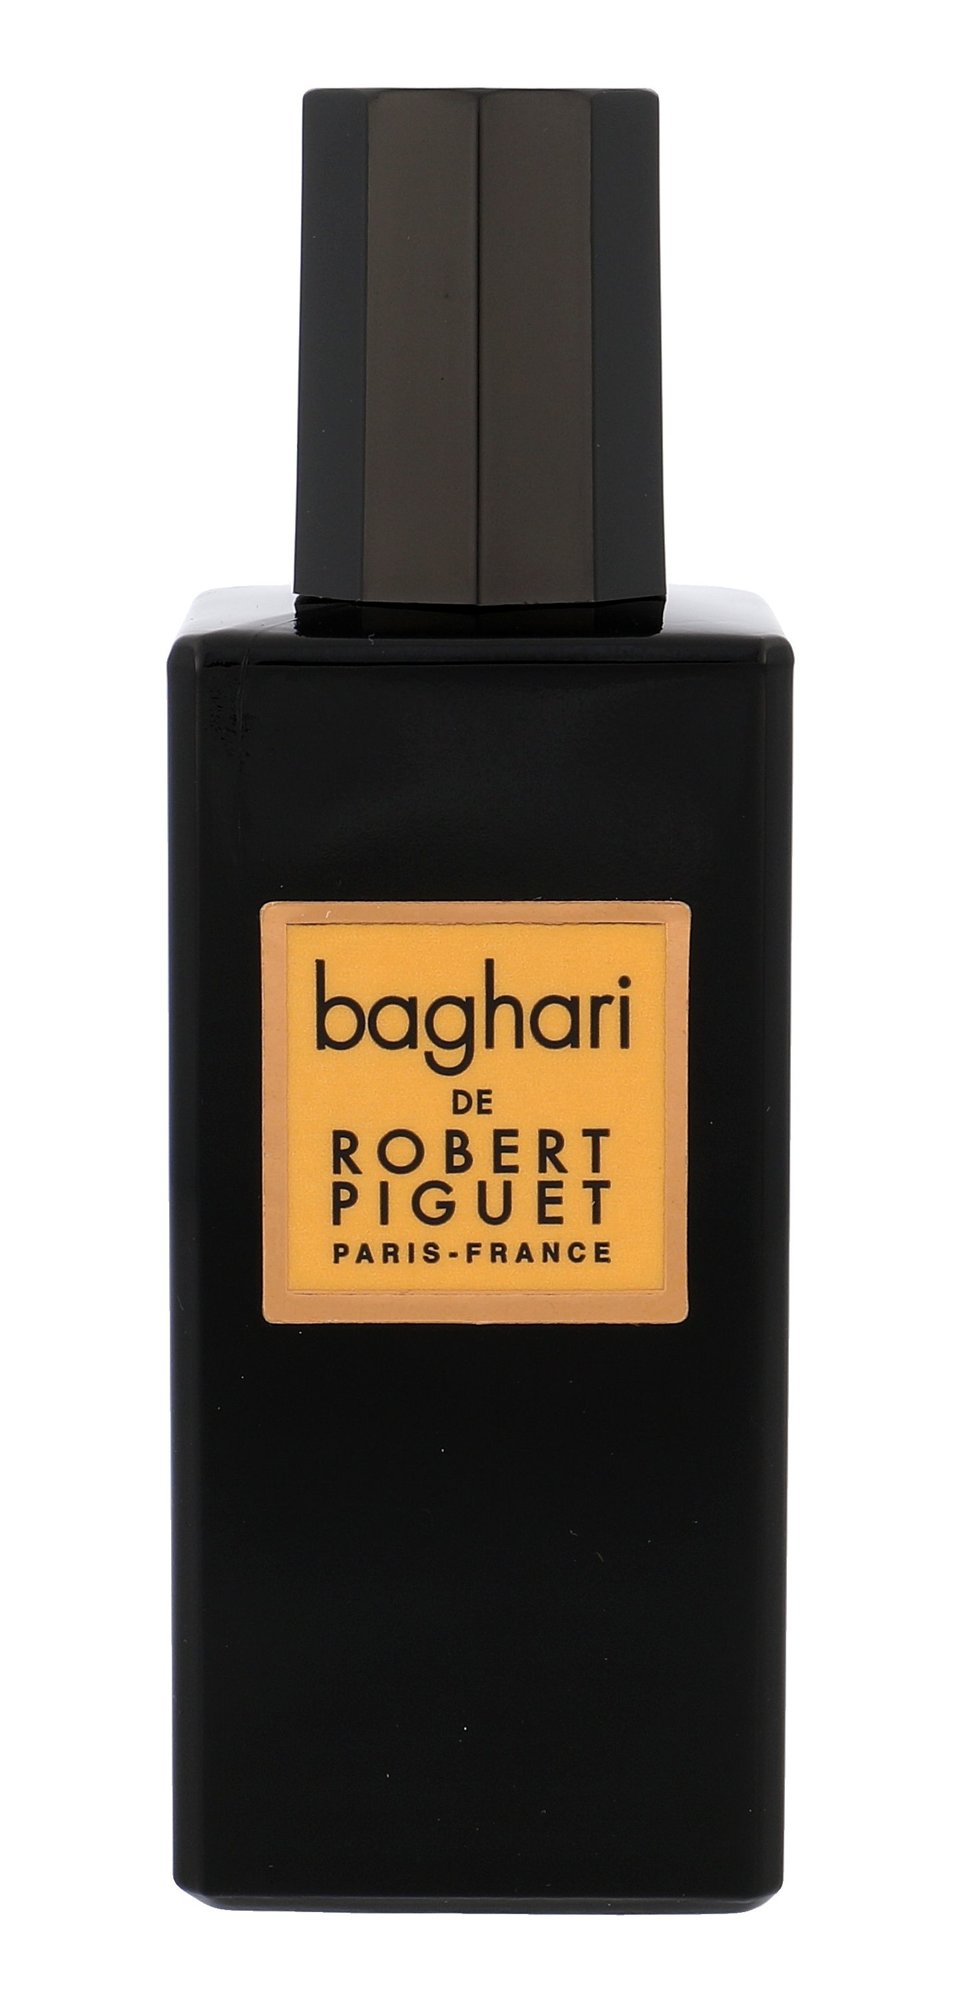 Robert Piguet Baghari 2006